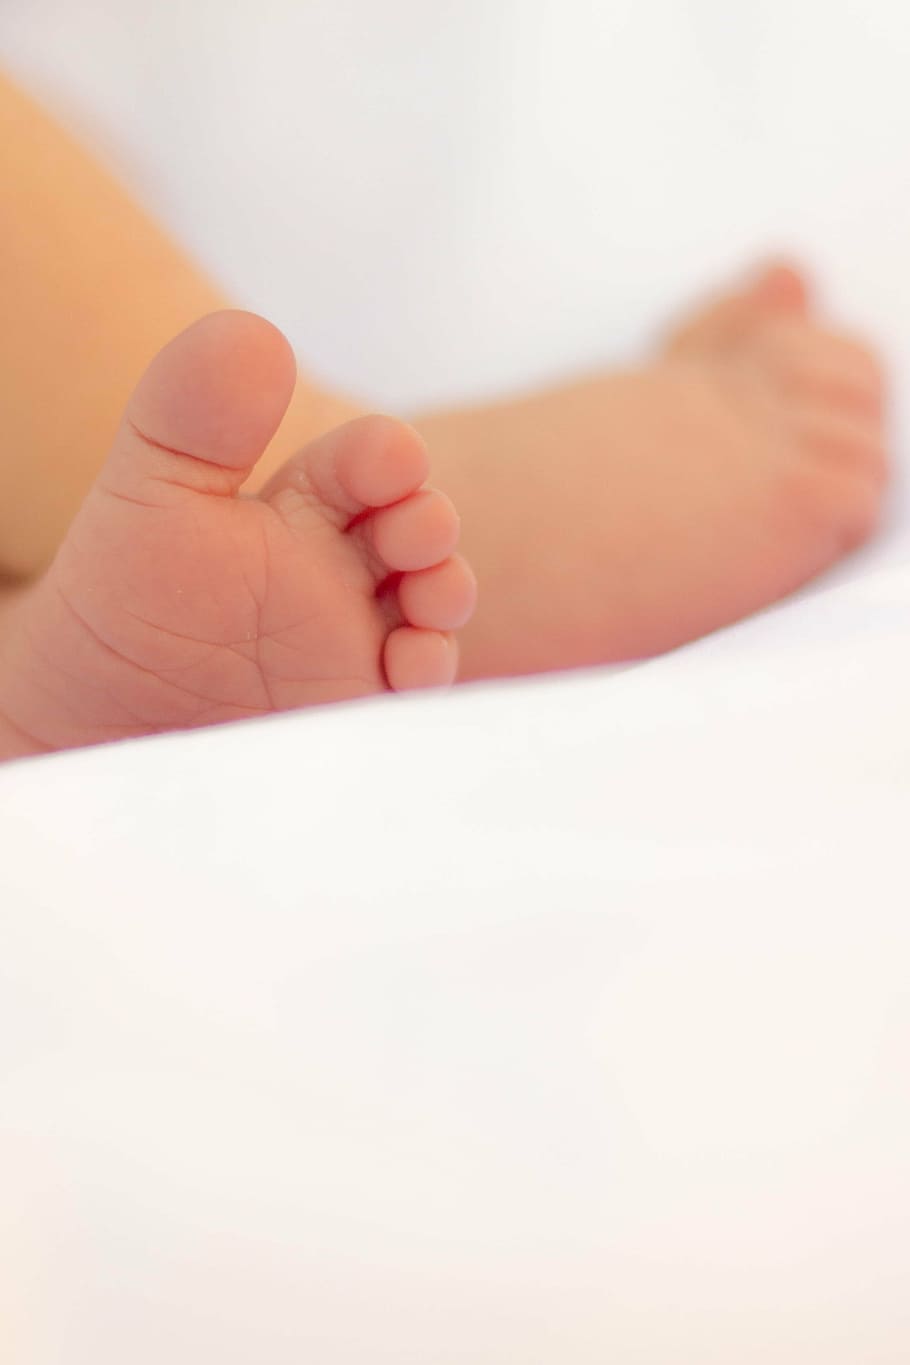 kaki bayi, kehidupan, manusia, bayi, anak, balita, kaki, kelahiran, tangan manusia, close-up